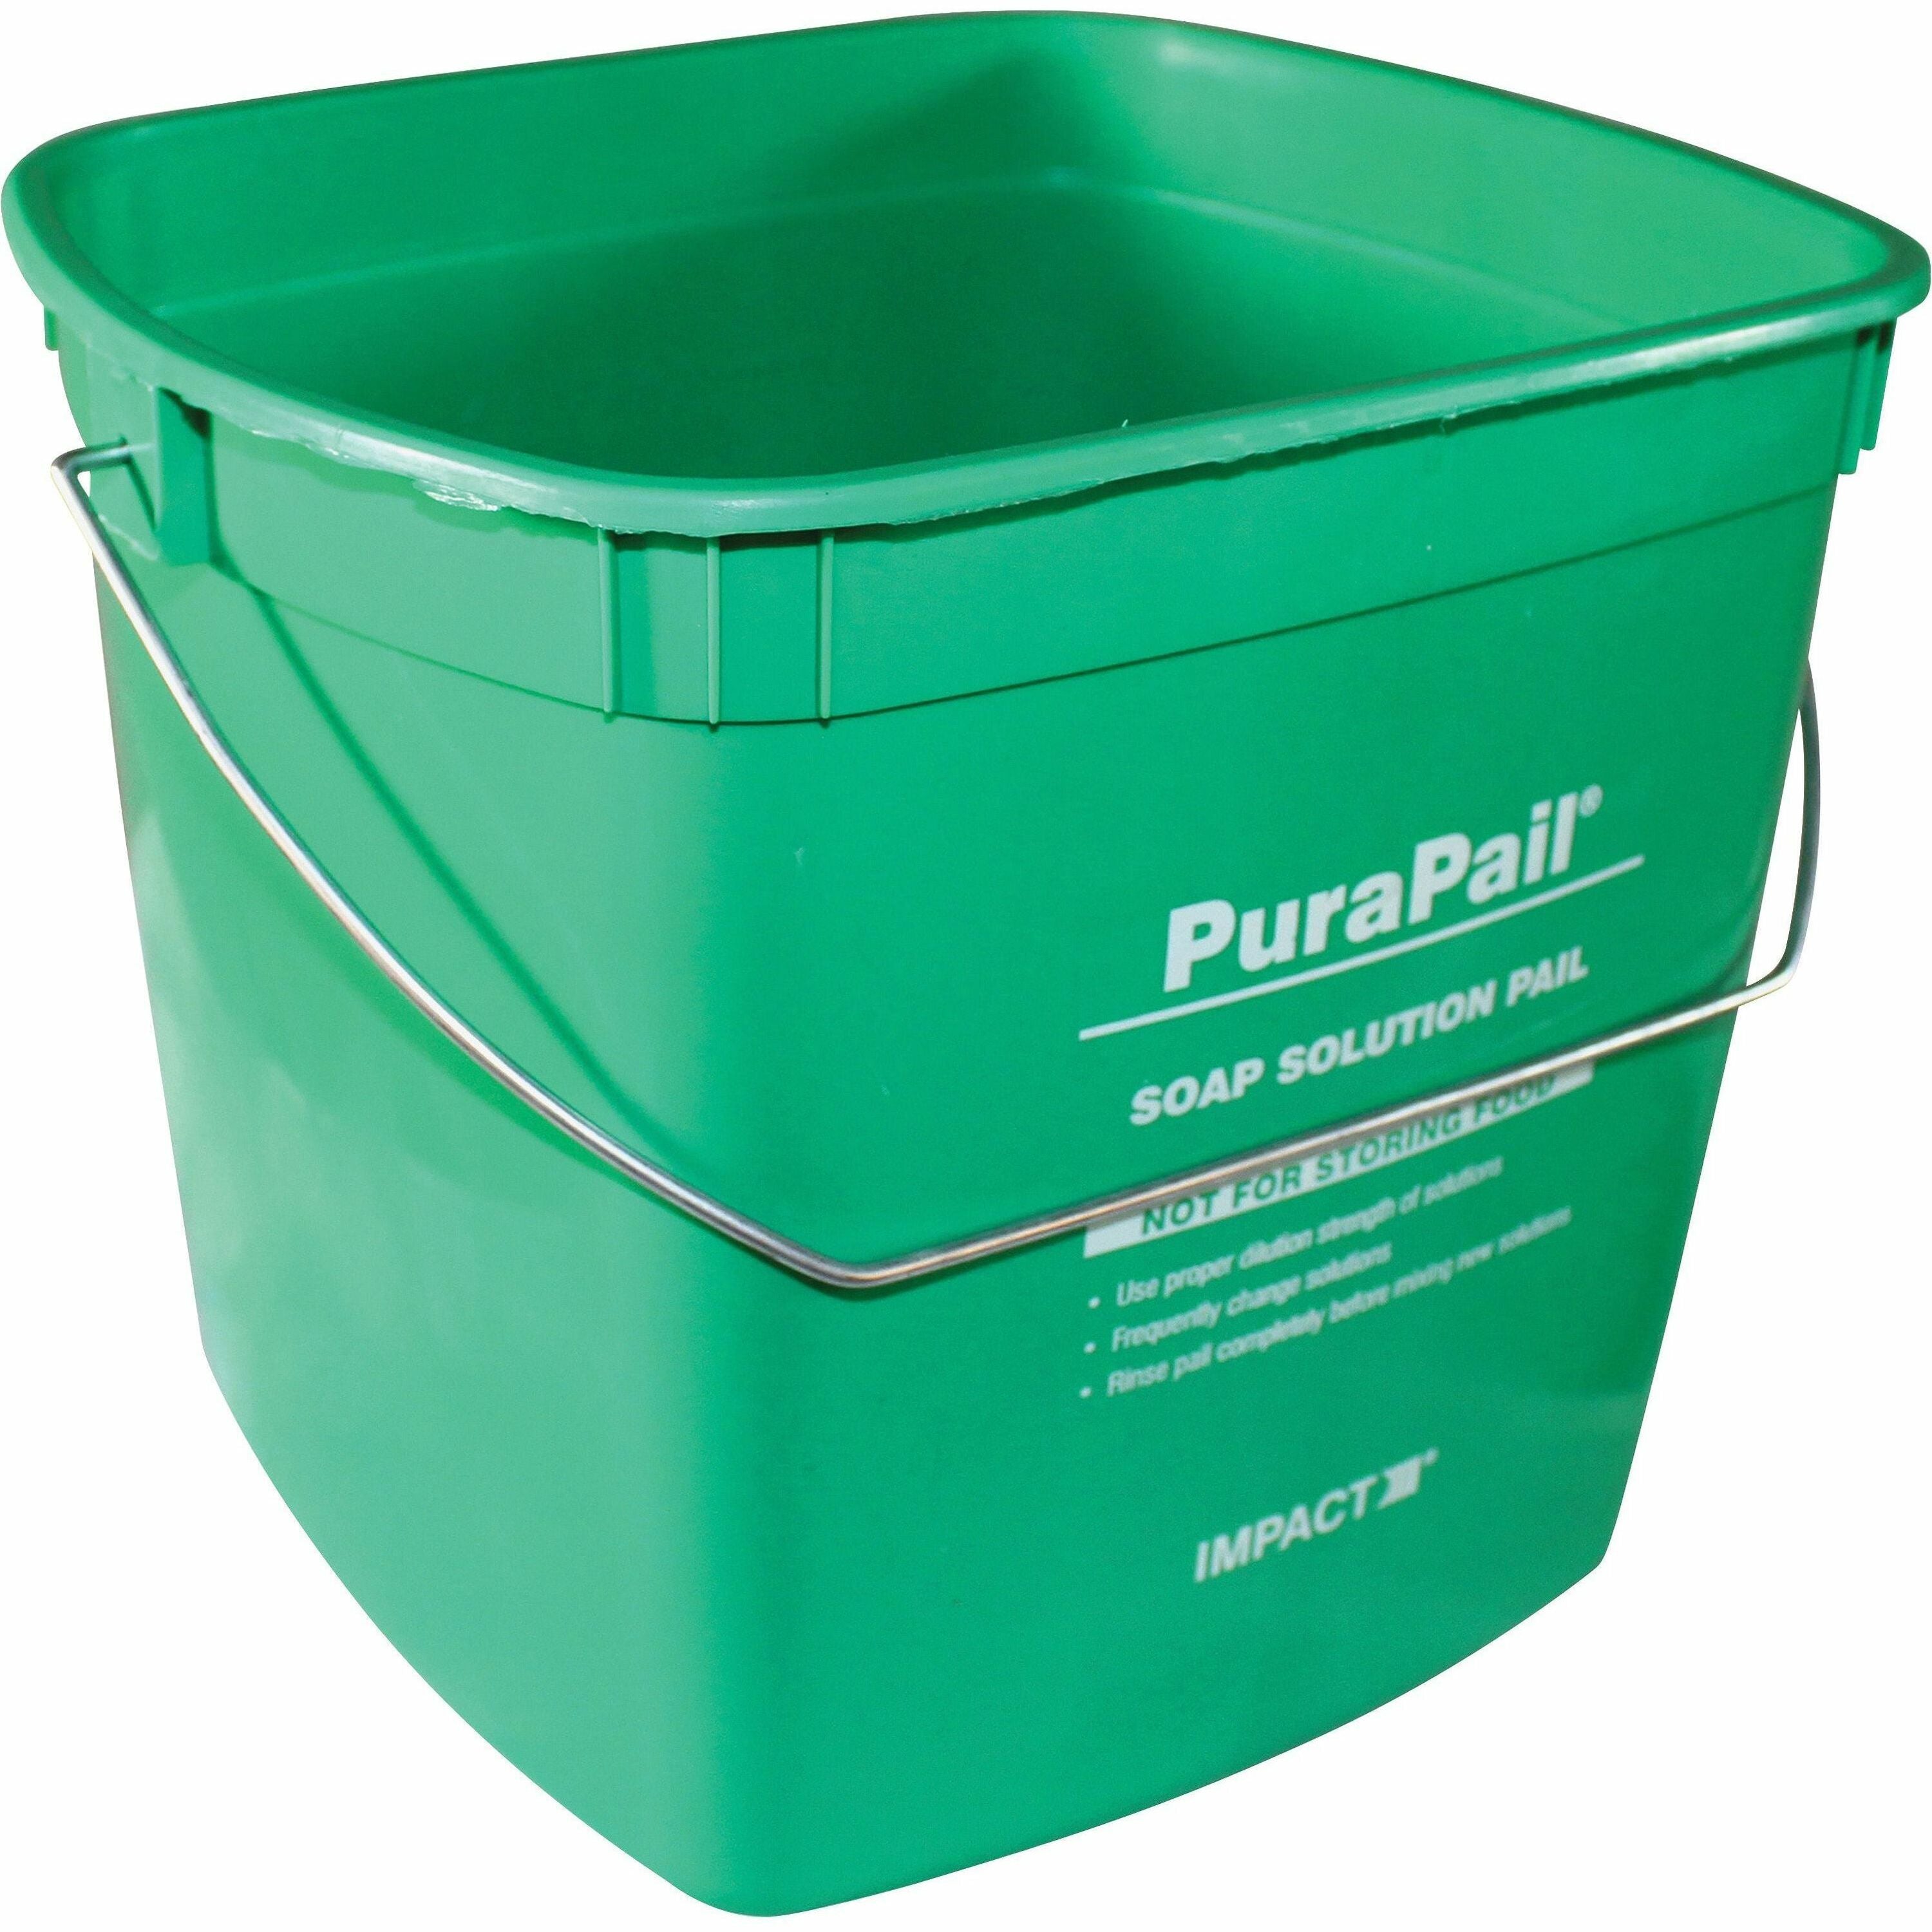 PuraPail Utility Cleaning Bucket - 1.50 gal - 7.7" x 8.1" - Green - 1 Each - 